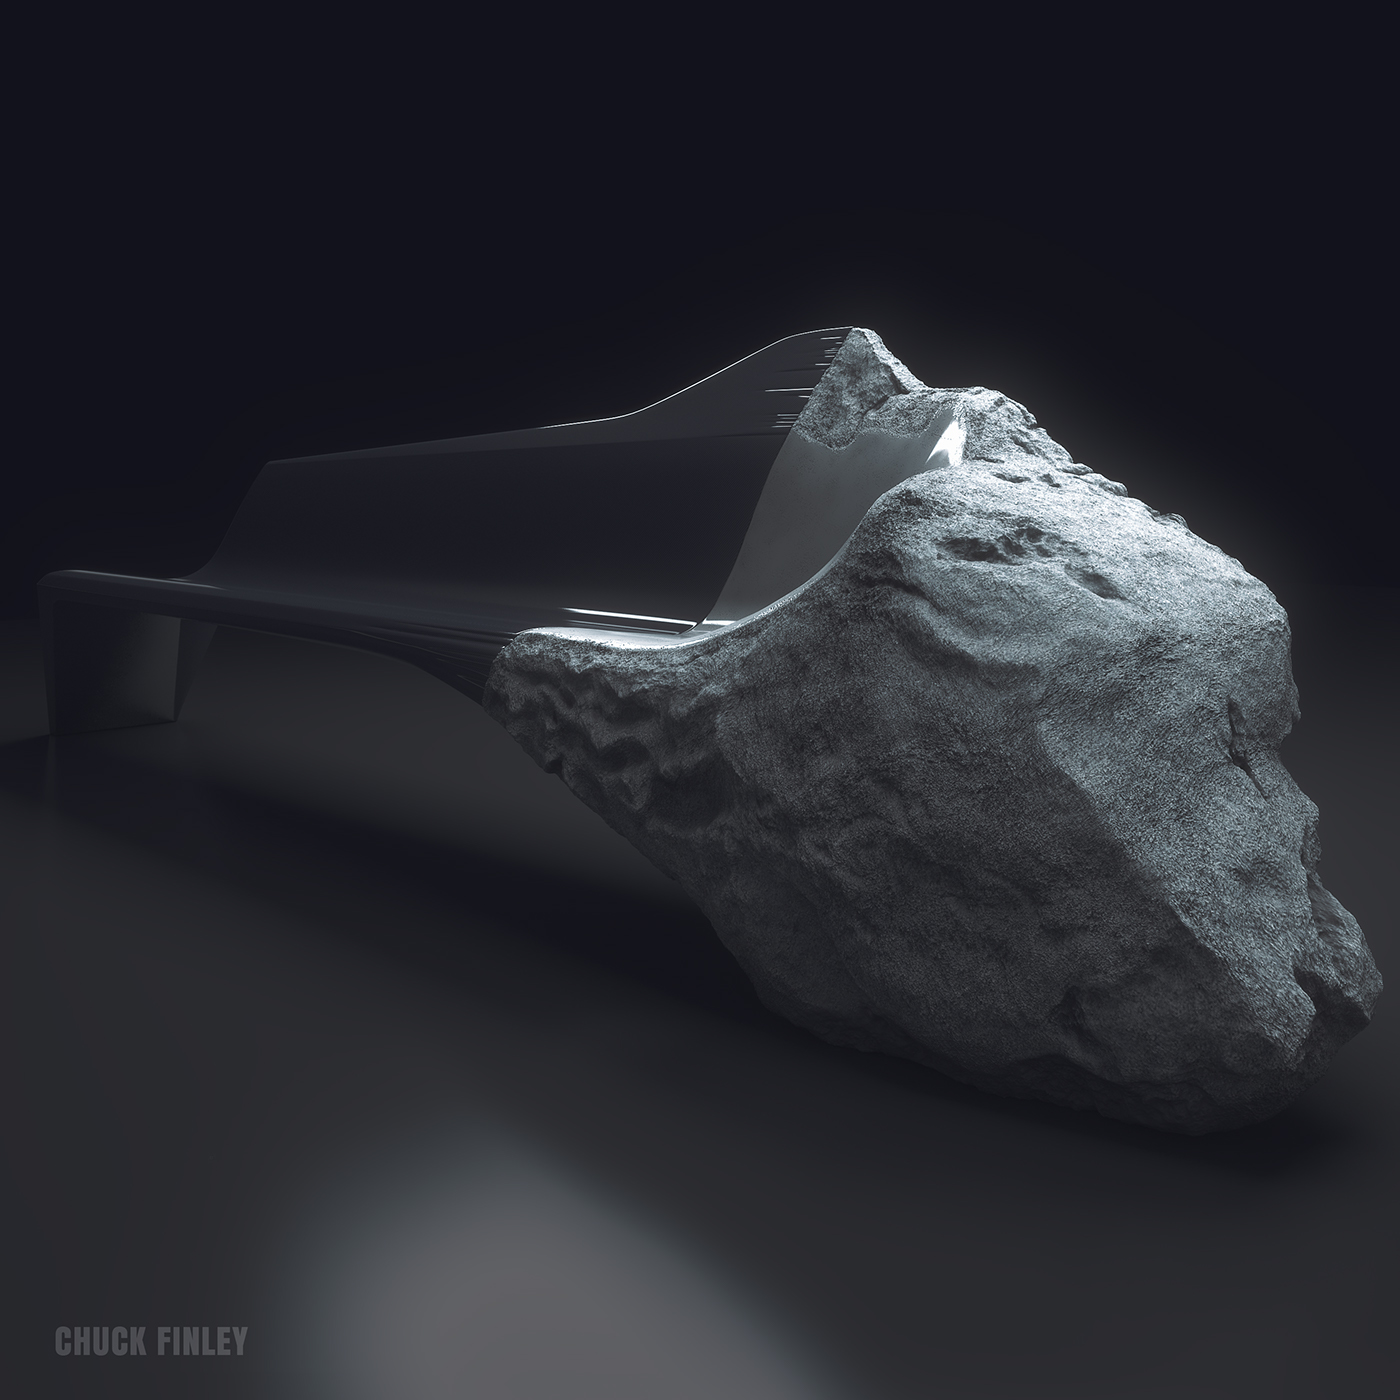 PEUGEOT Carbon Fiber volcanic rock onyx sofa art object industrial design 